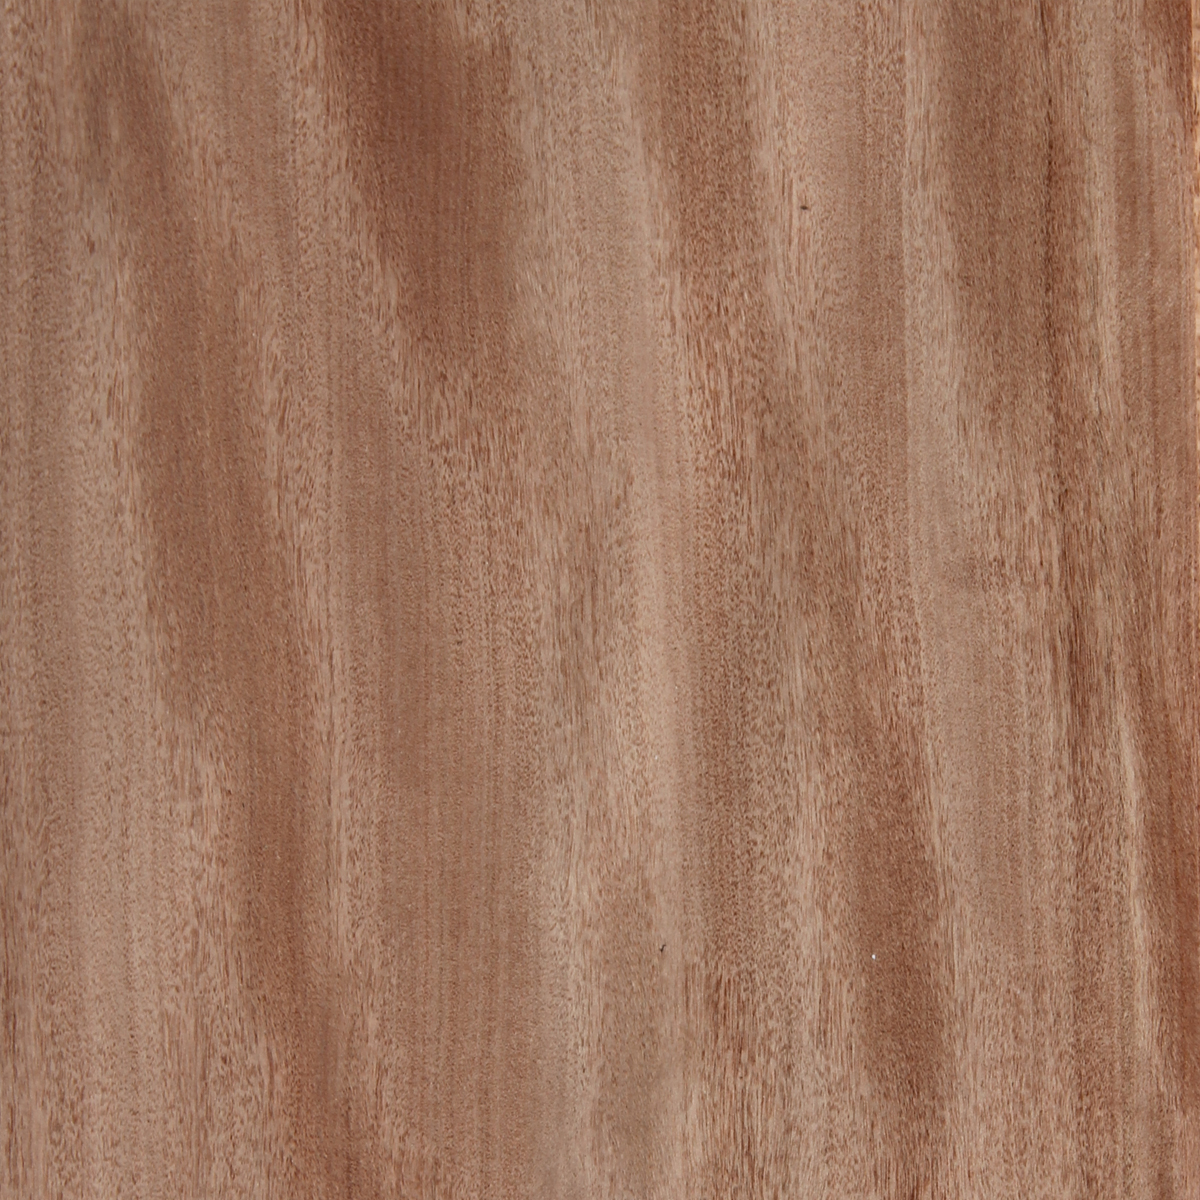 Box, brush - figured (Quarter) - Timber Veneer & Plywood Species